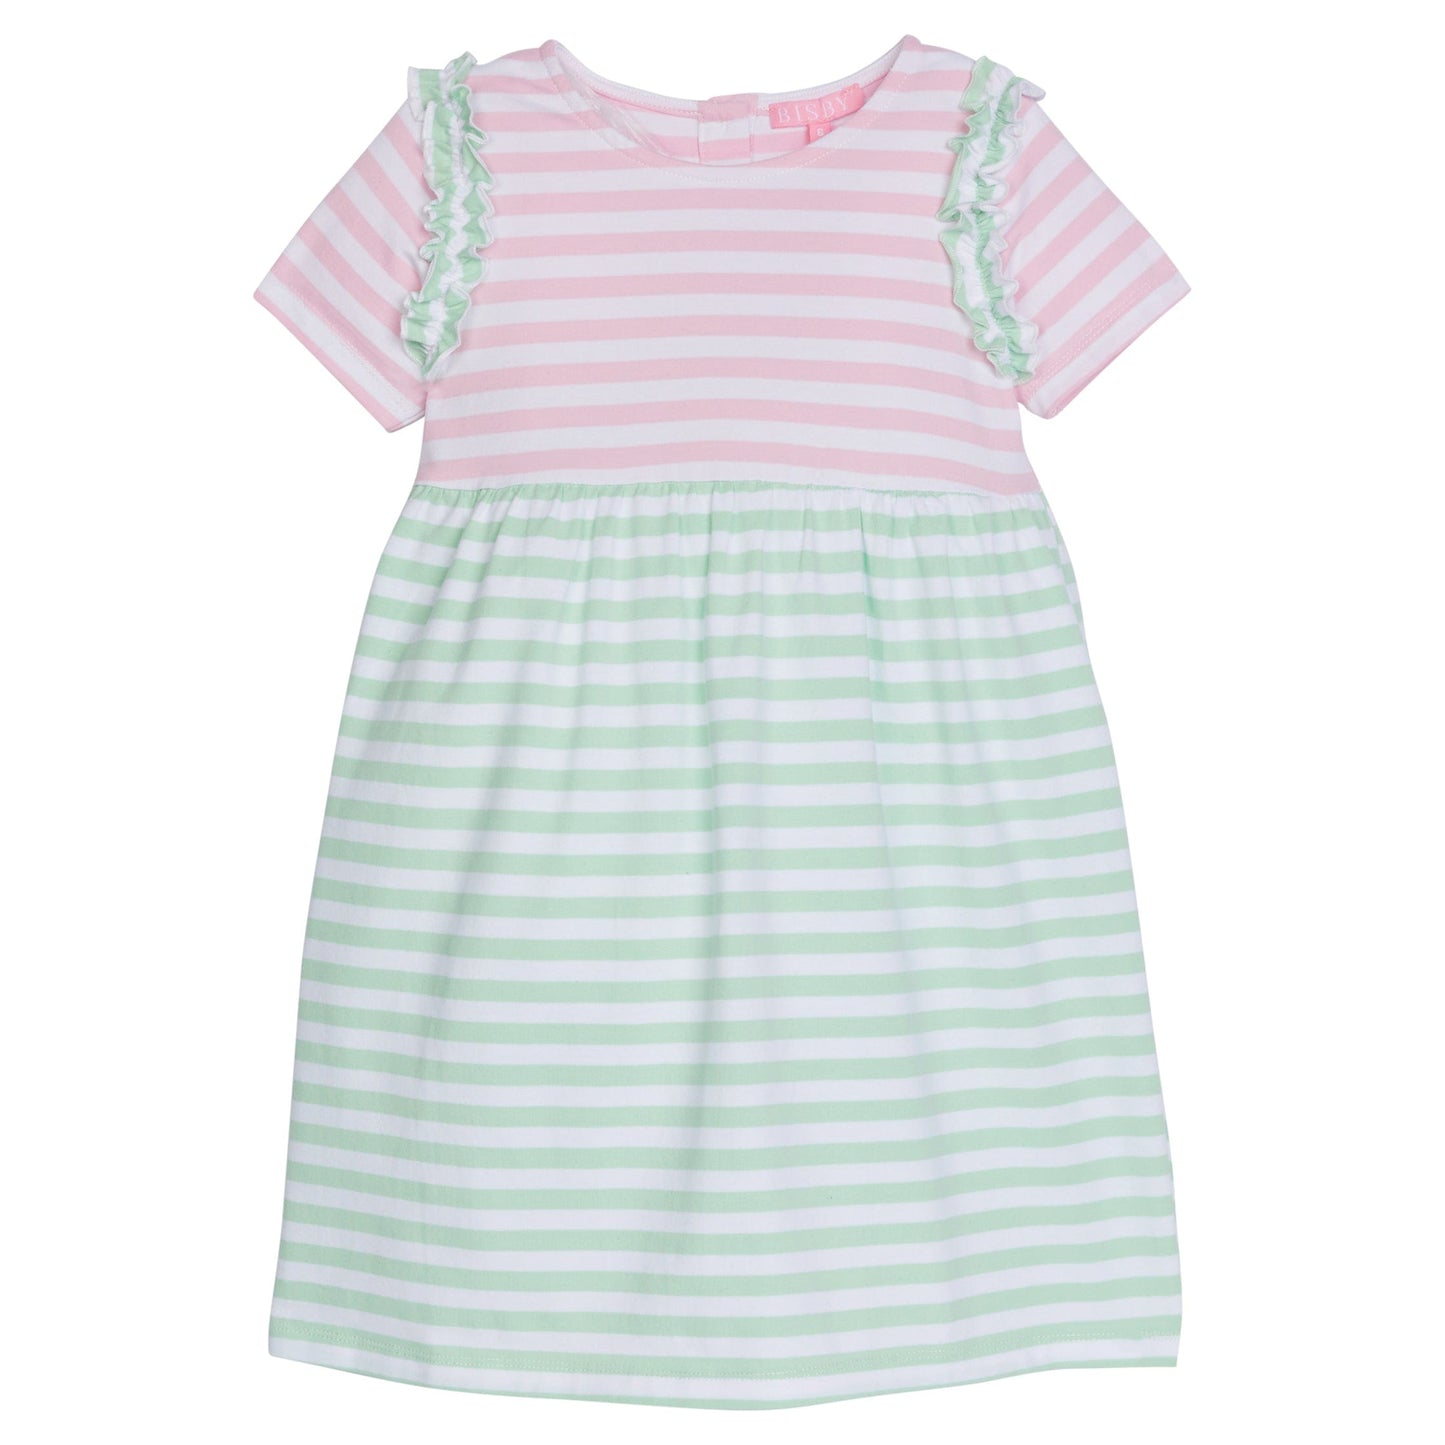 Helen Dress, Pink & Green Stripe